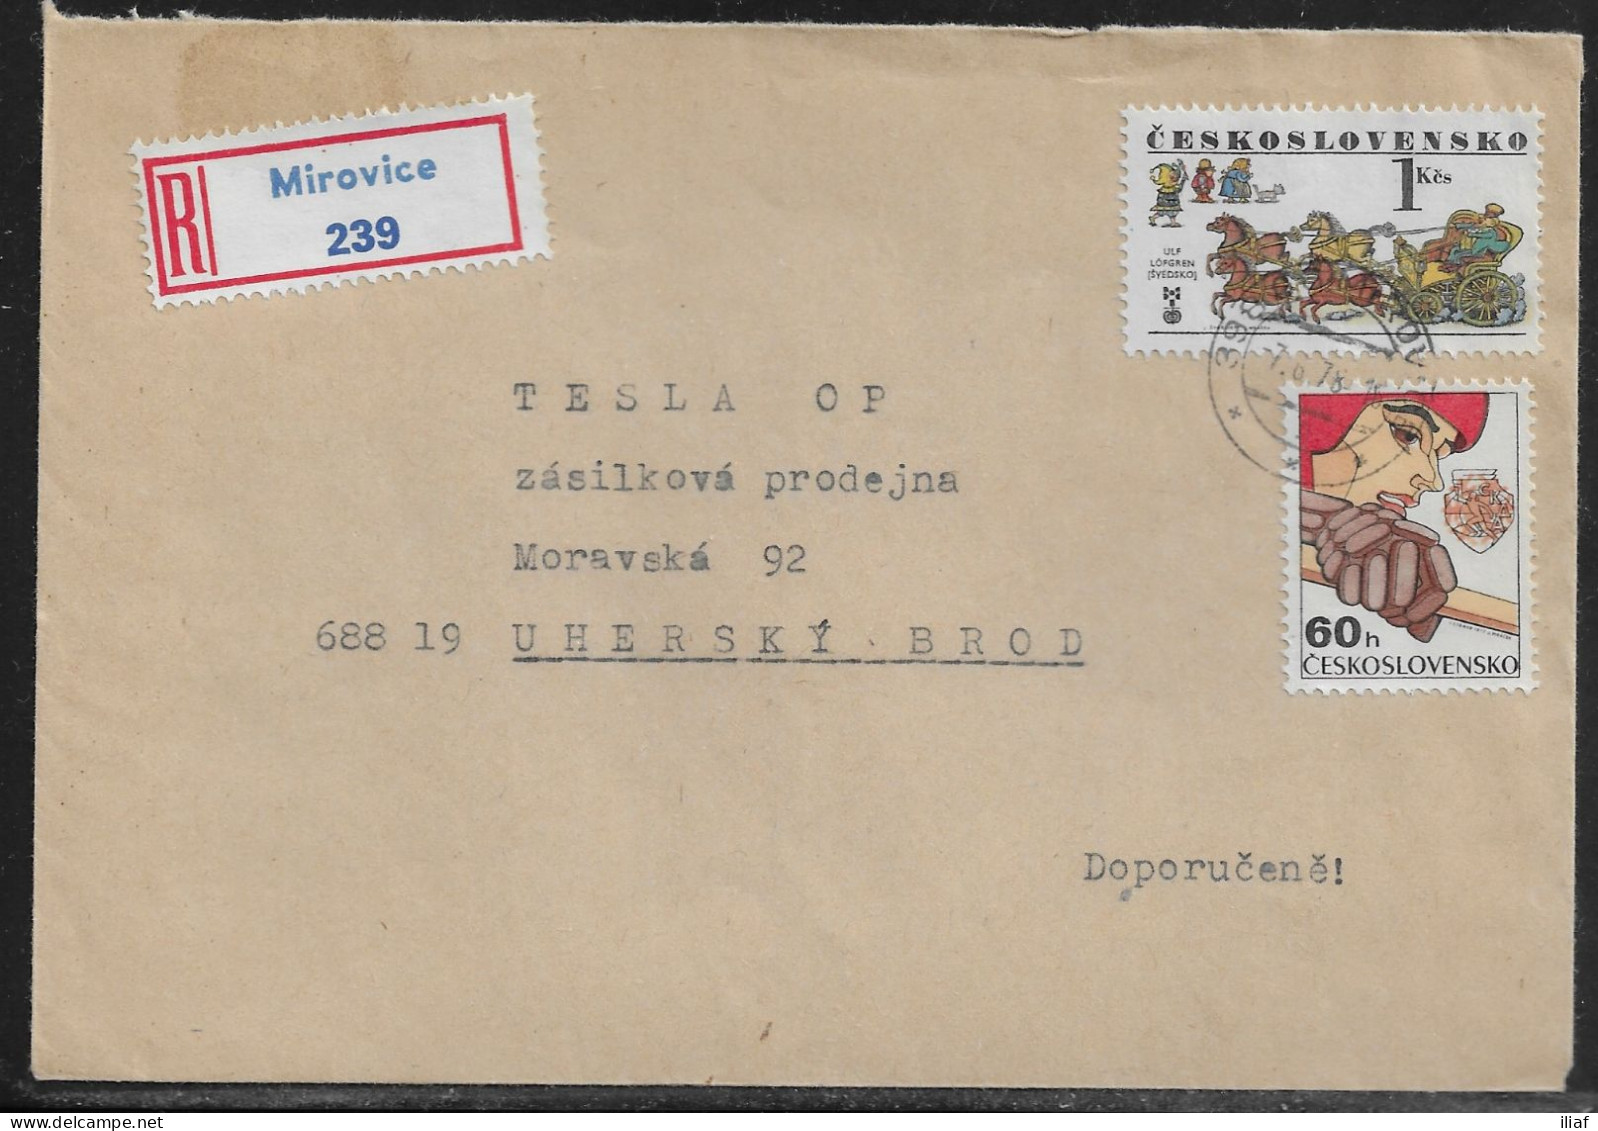 Czechoslovakia. Stamps Sc. 2095, 1735 On Registered Letter, Sent From Mirovice 7.08.78 For “Tesla” Uhersky Brod. - Briefe U. Dokumente